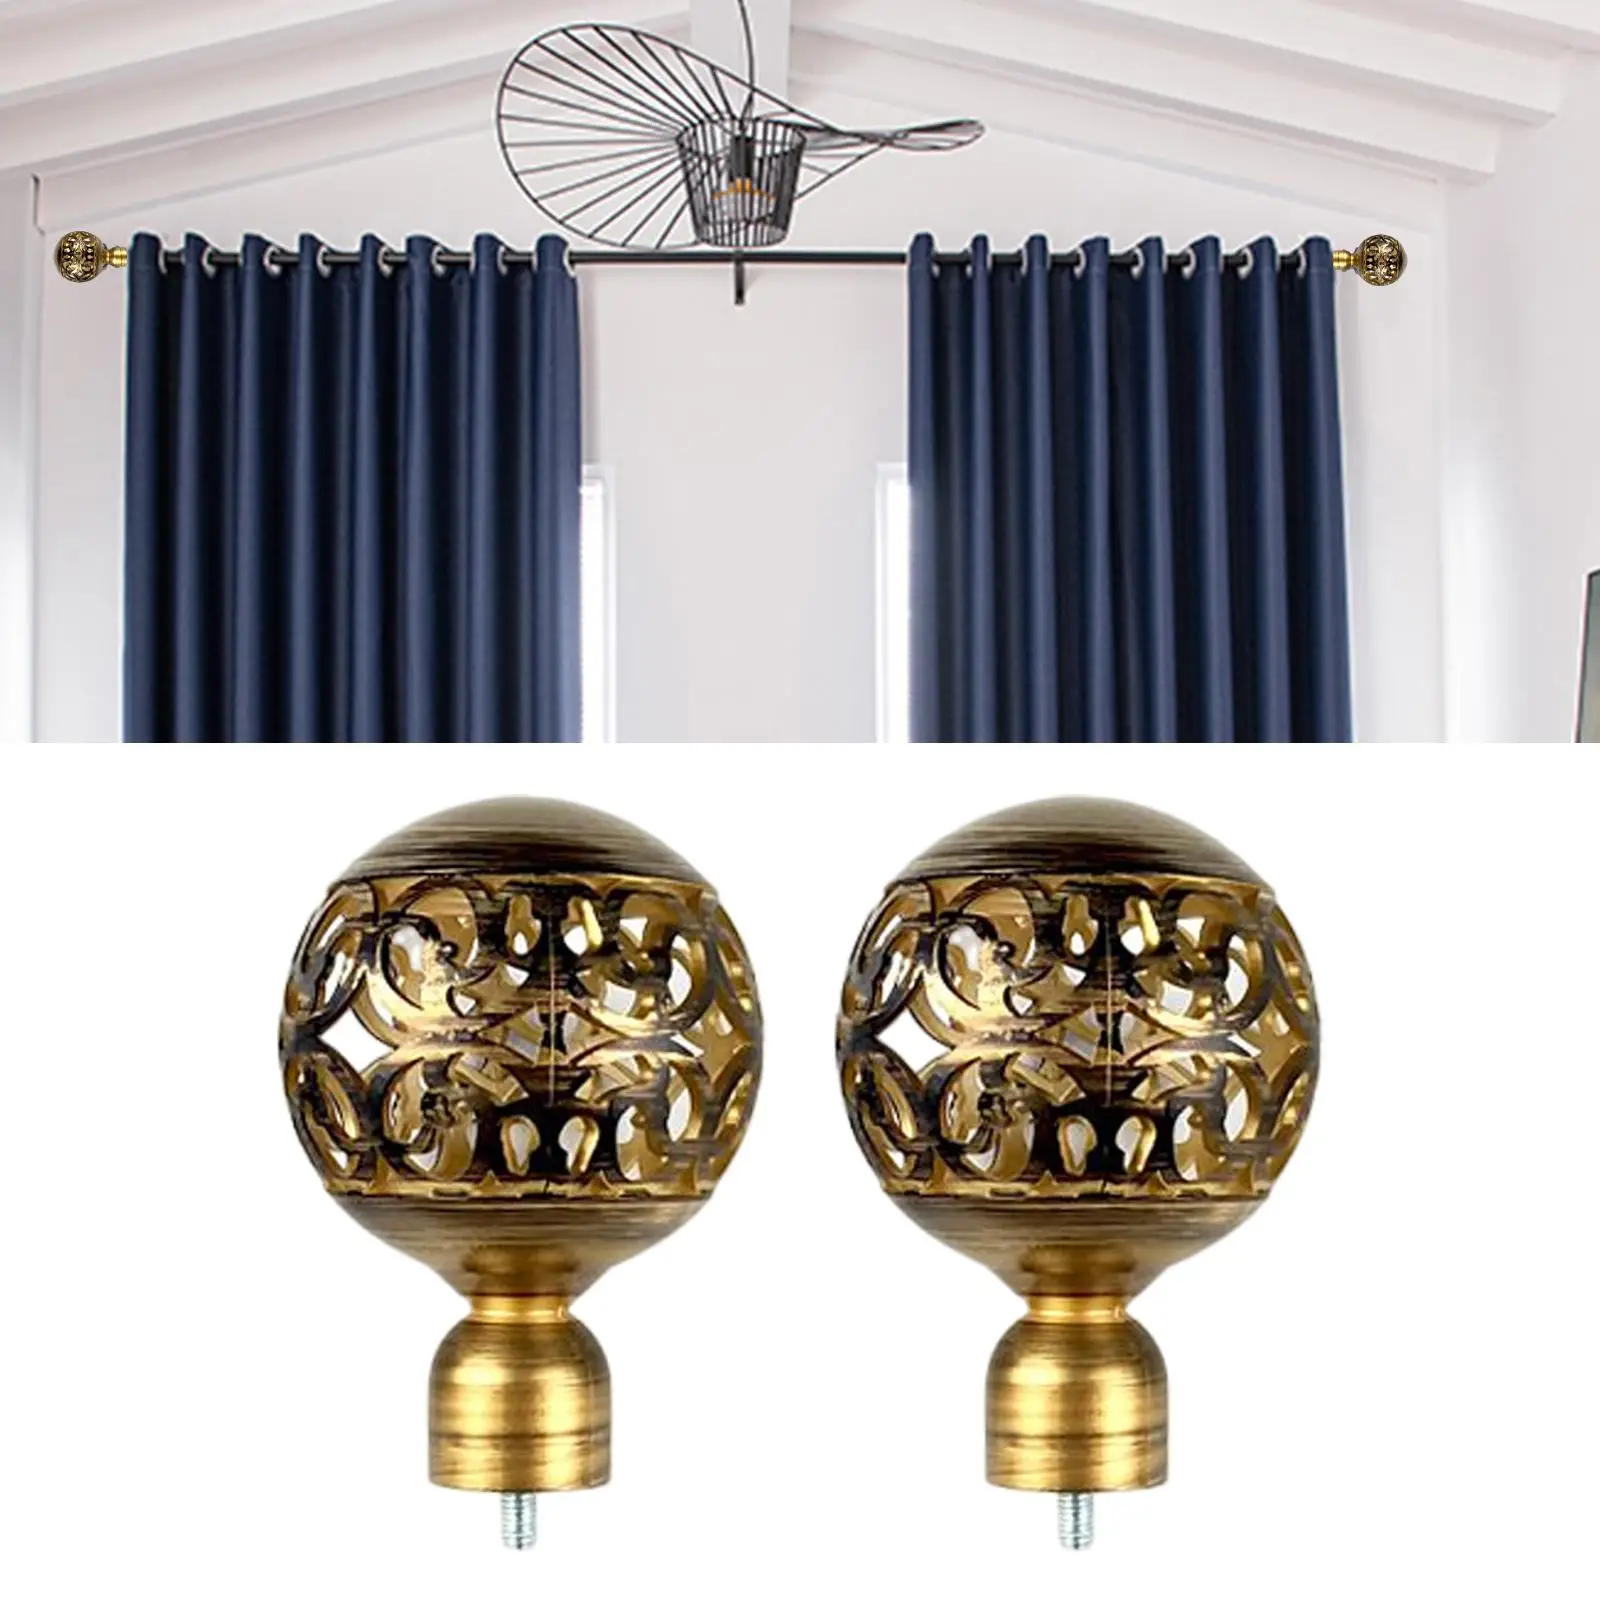 2x Hollow Curtain Rod Finials 3/4 inch Diameter Hardware Decorative Vintage Drapery Rod Finials for Living Room Bathroom